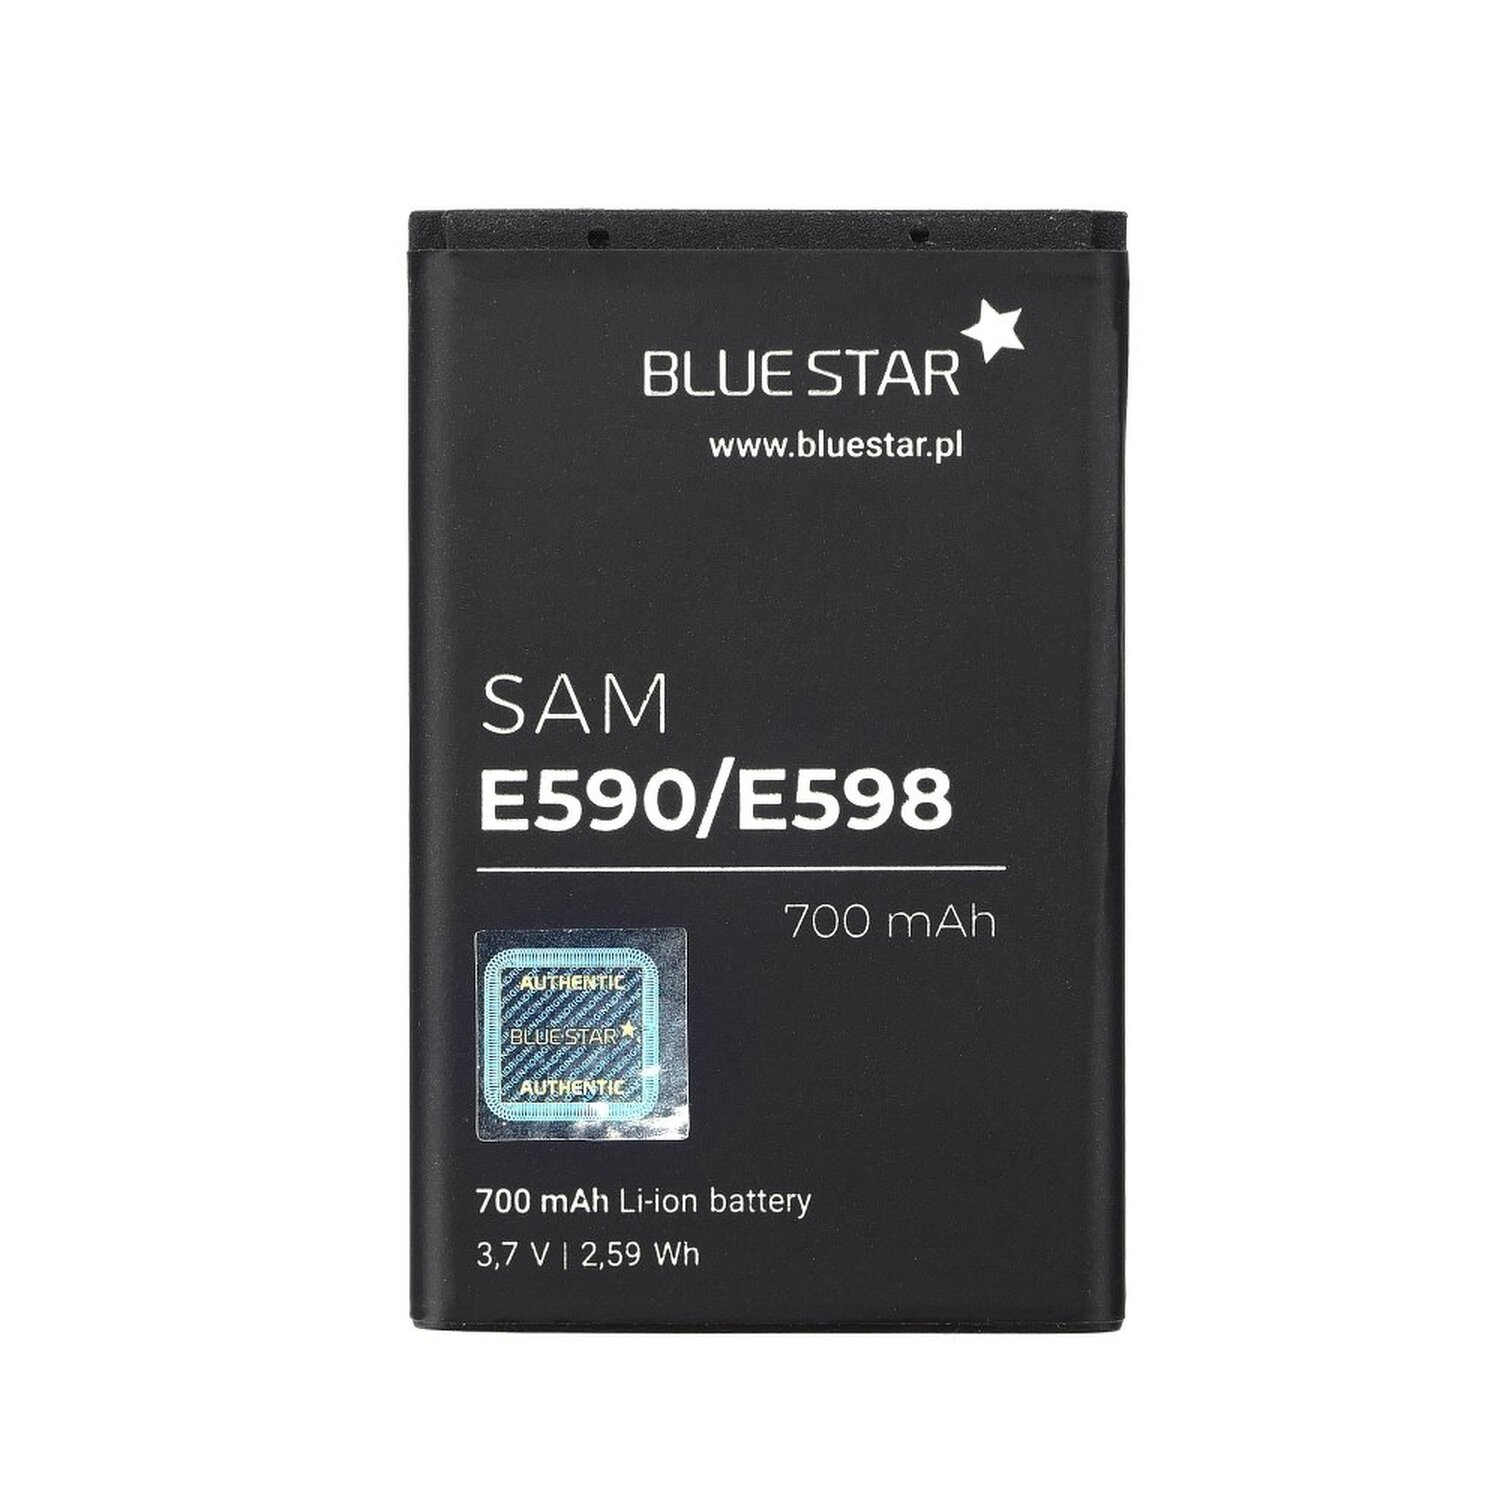 E790i BLUESTAR / Li-Ion / E598 Samsung E590 Akku für Handyakku